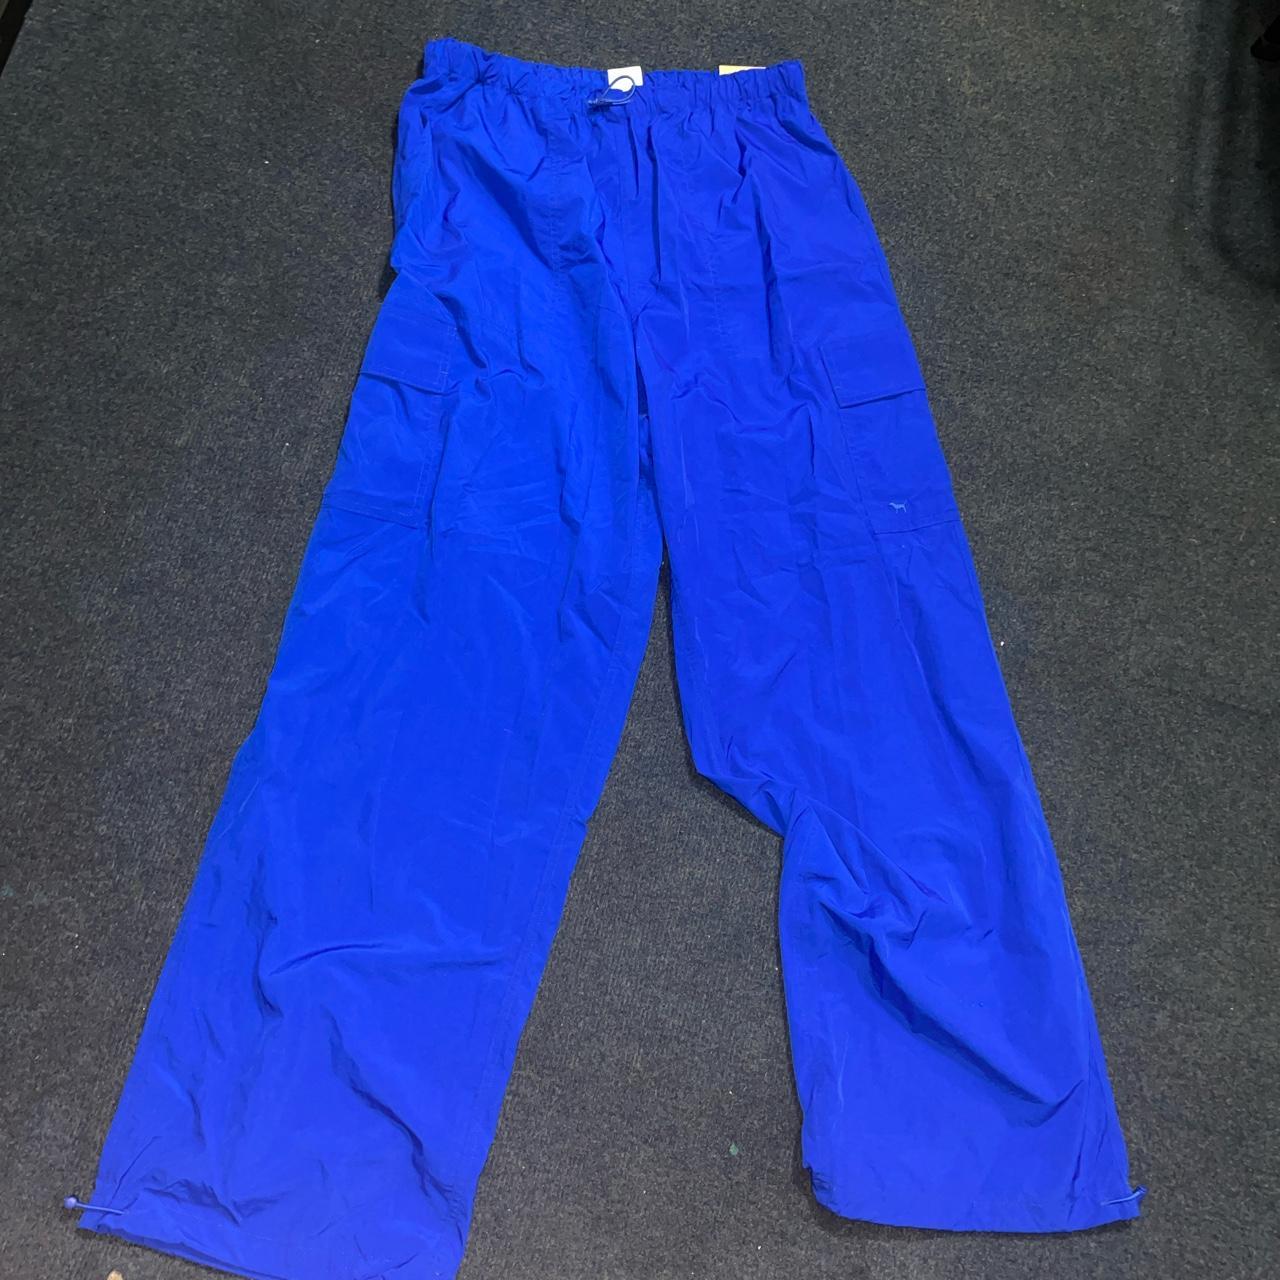 Royal blue cargo/parachute pants elastic waist and - Depop